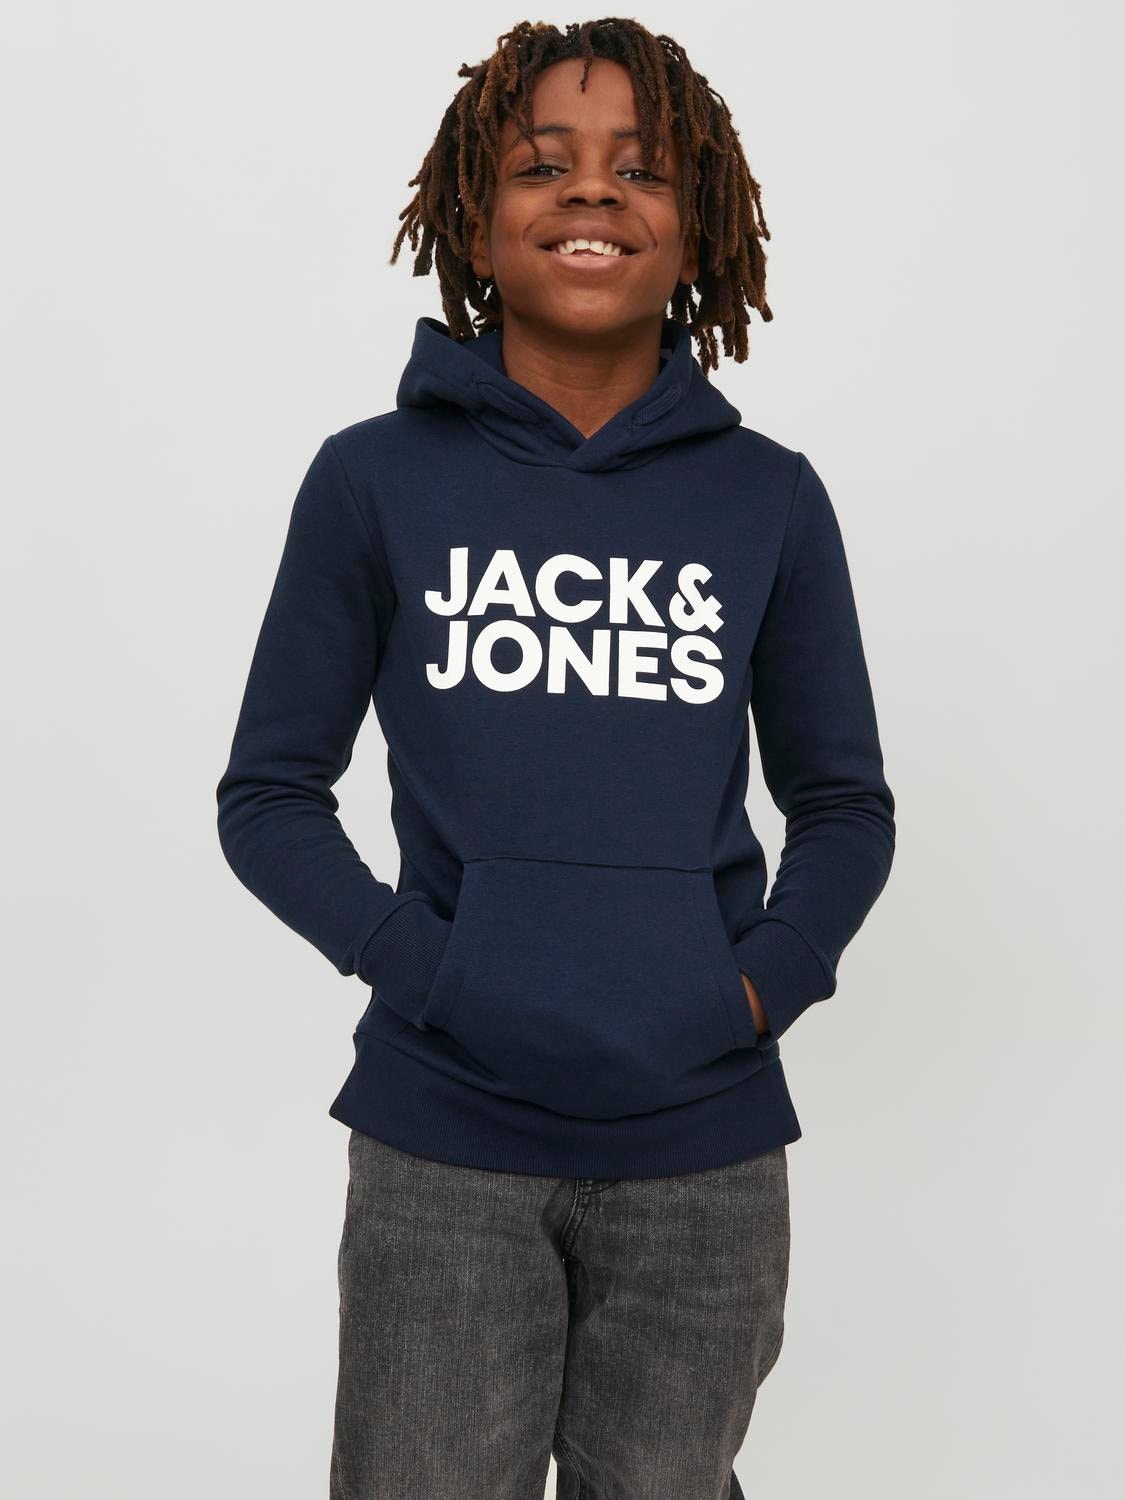 Jack & Jones Logo Kapuzenpullover Für jungs -Navy Blazer - 12152841